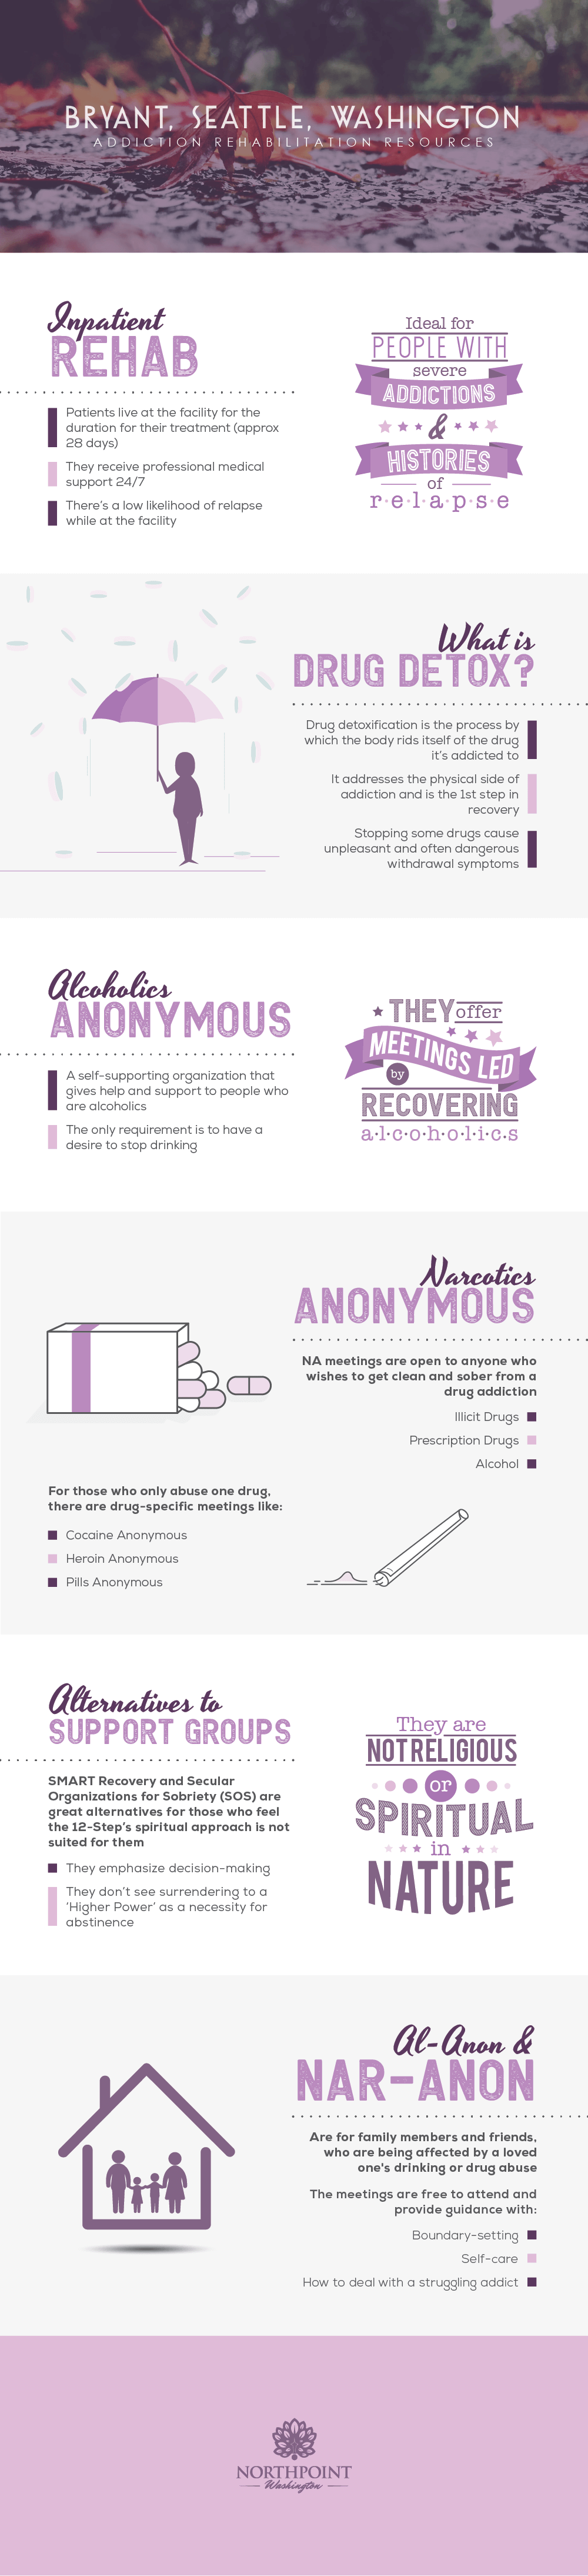 Bryant, Washington Addiction Resources Infographic